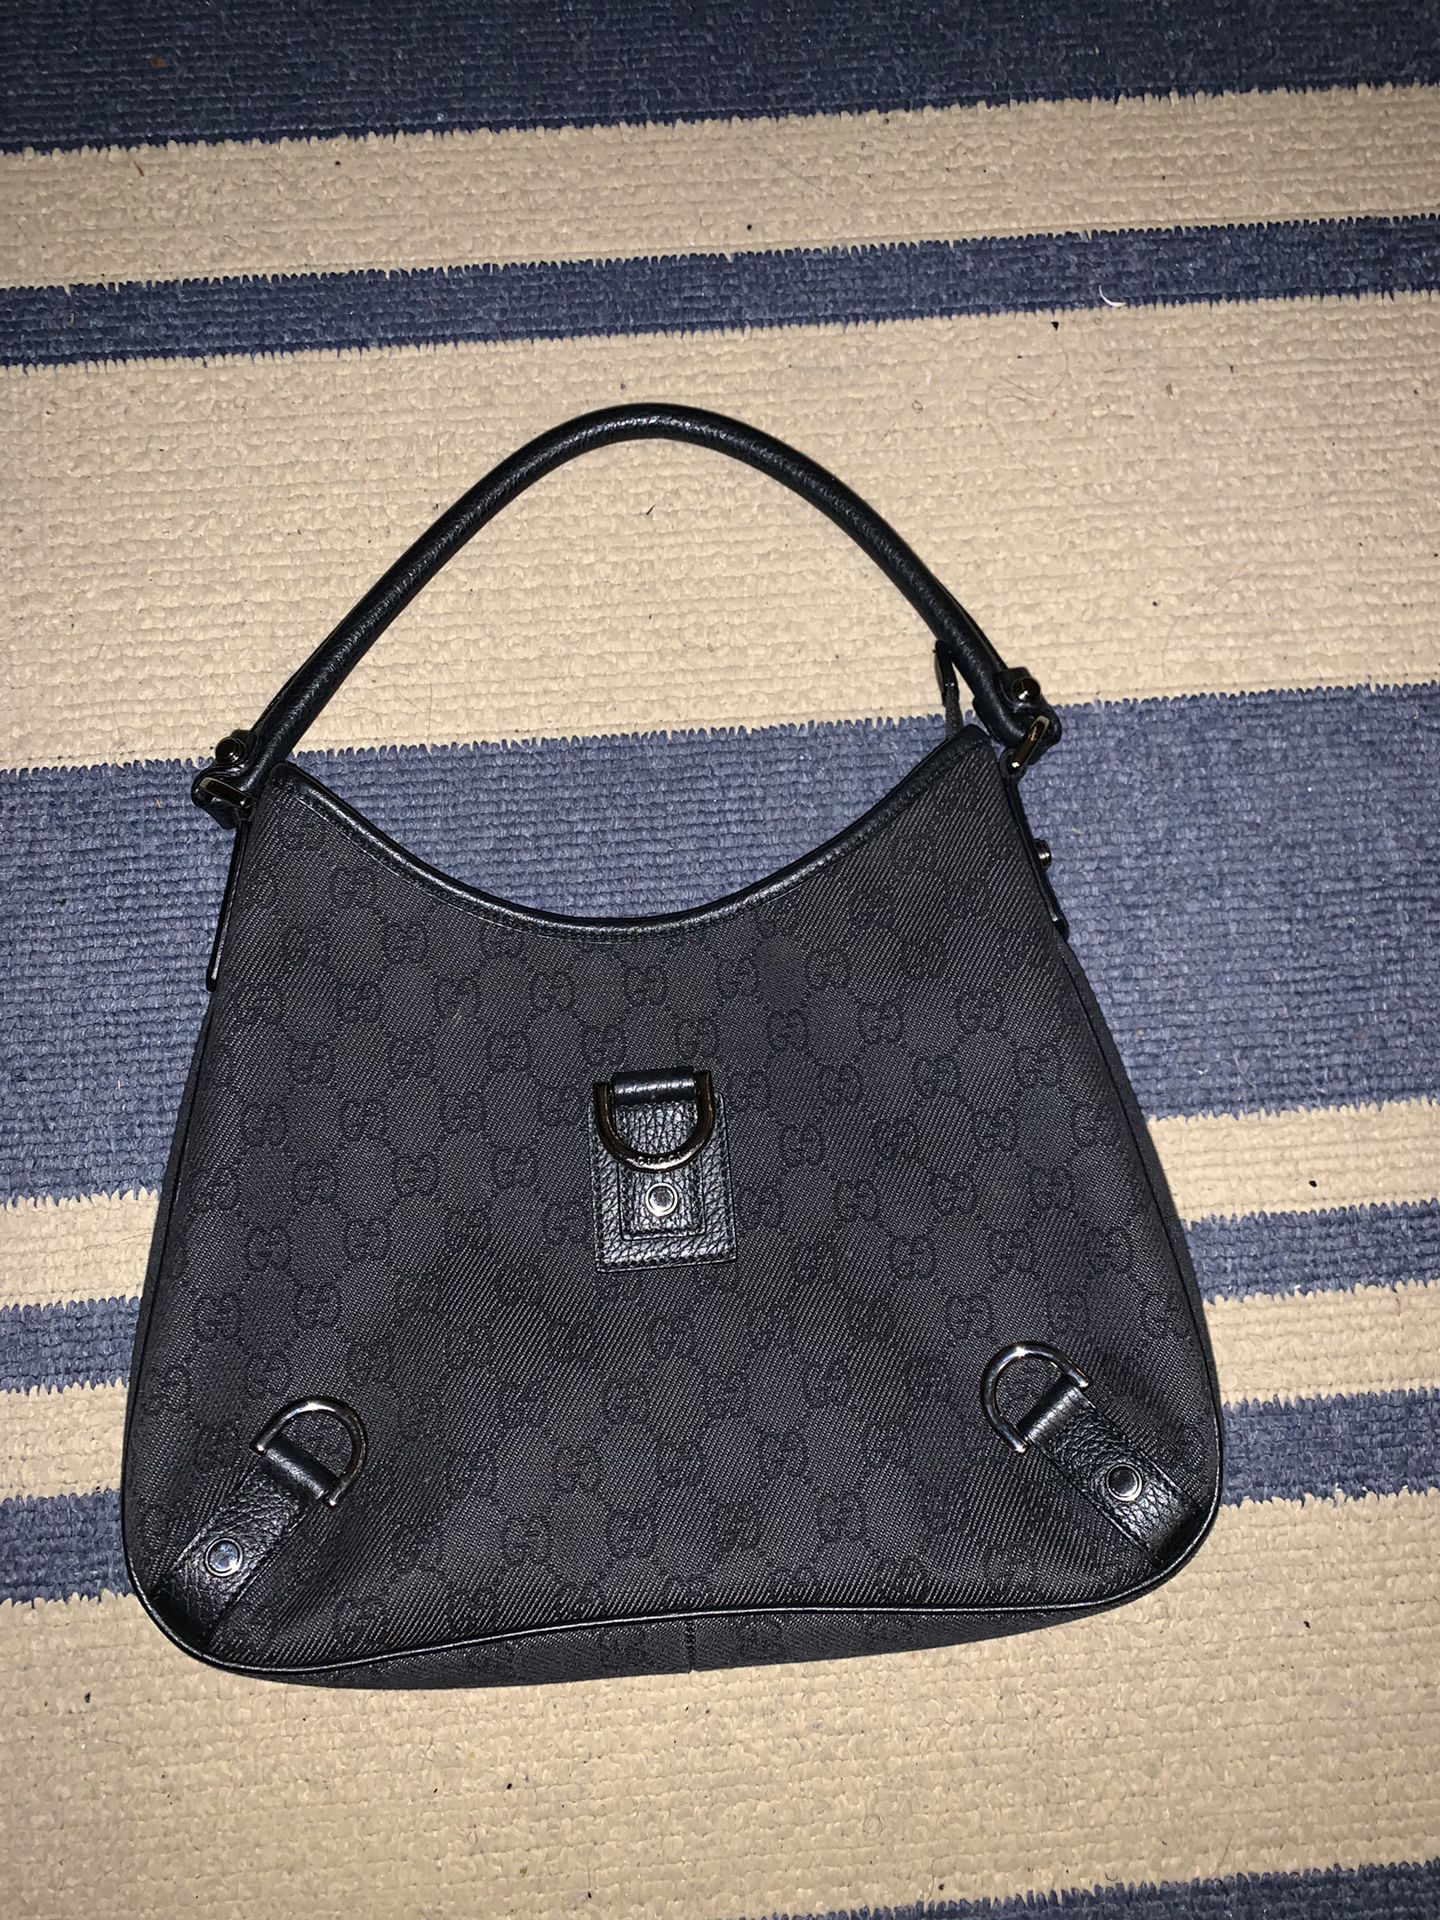 Gucci Black Canvas Hobo Bag